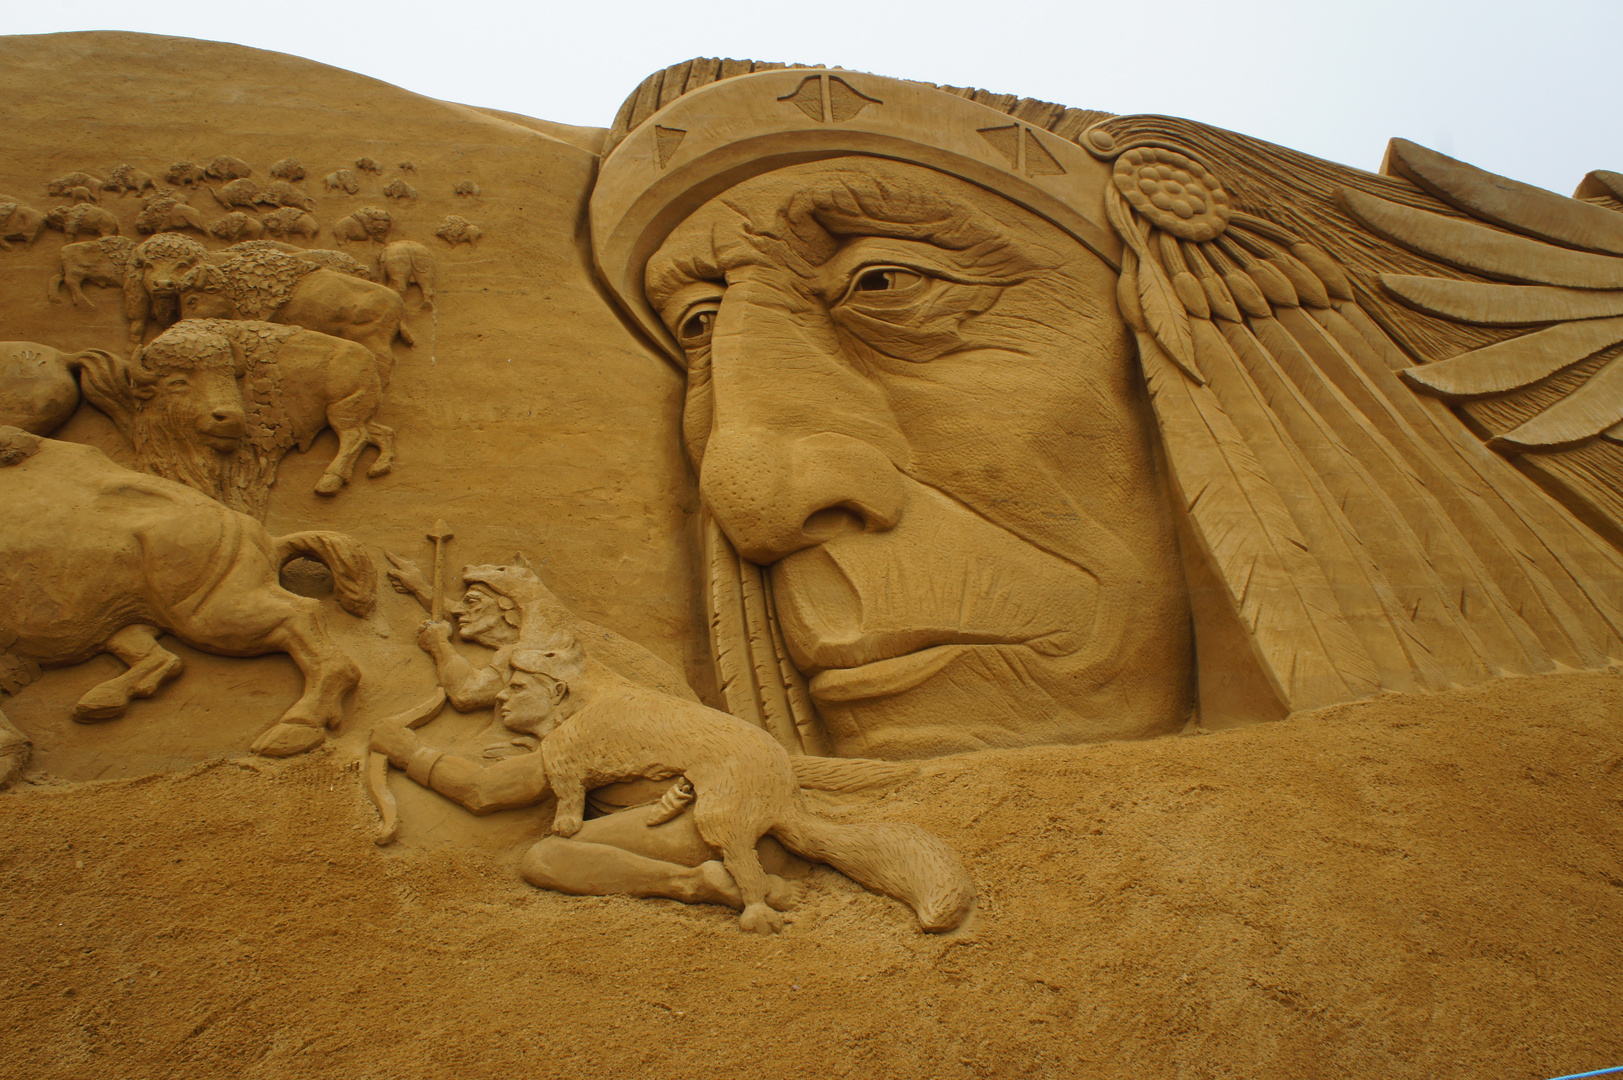 Sandskulptur-Festival 2013 "The Wild West" (4:3)